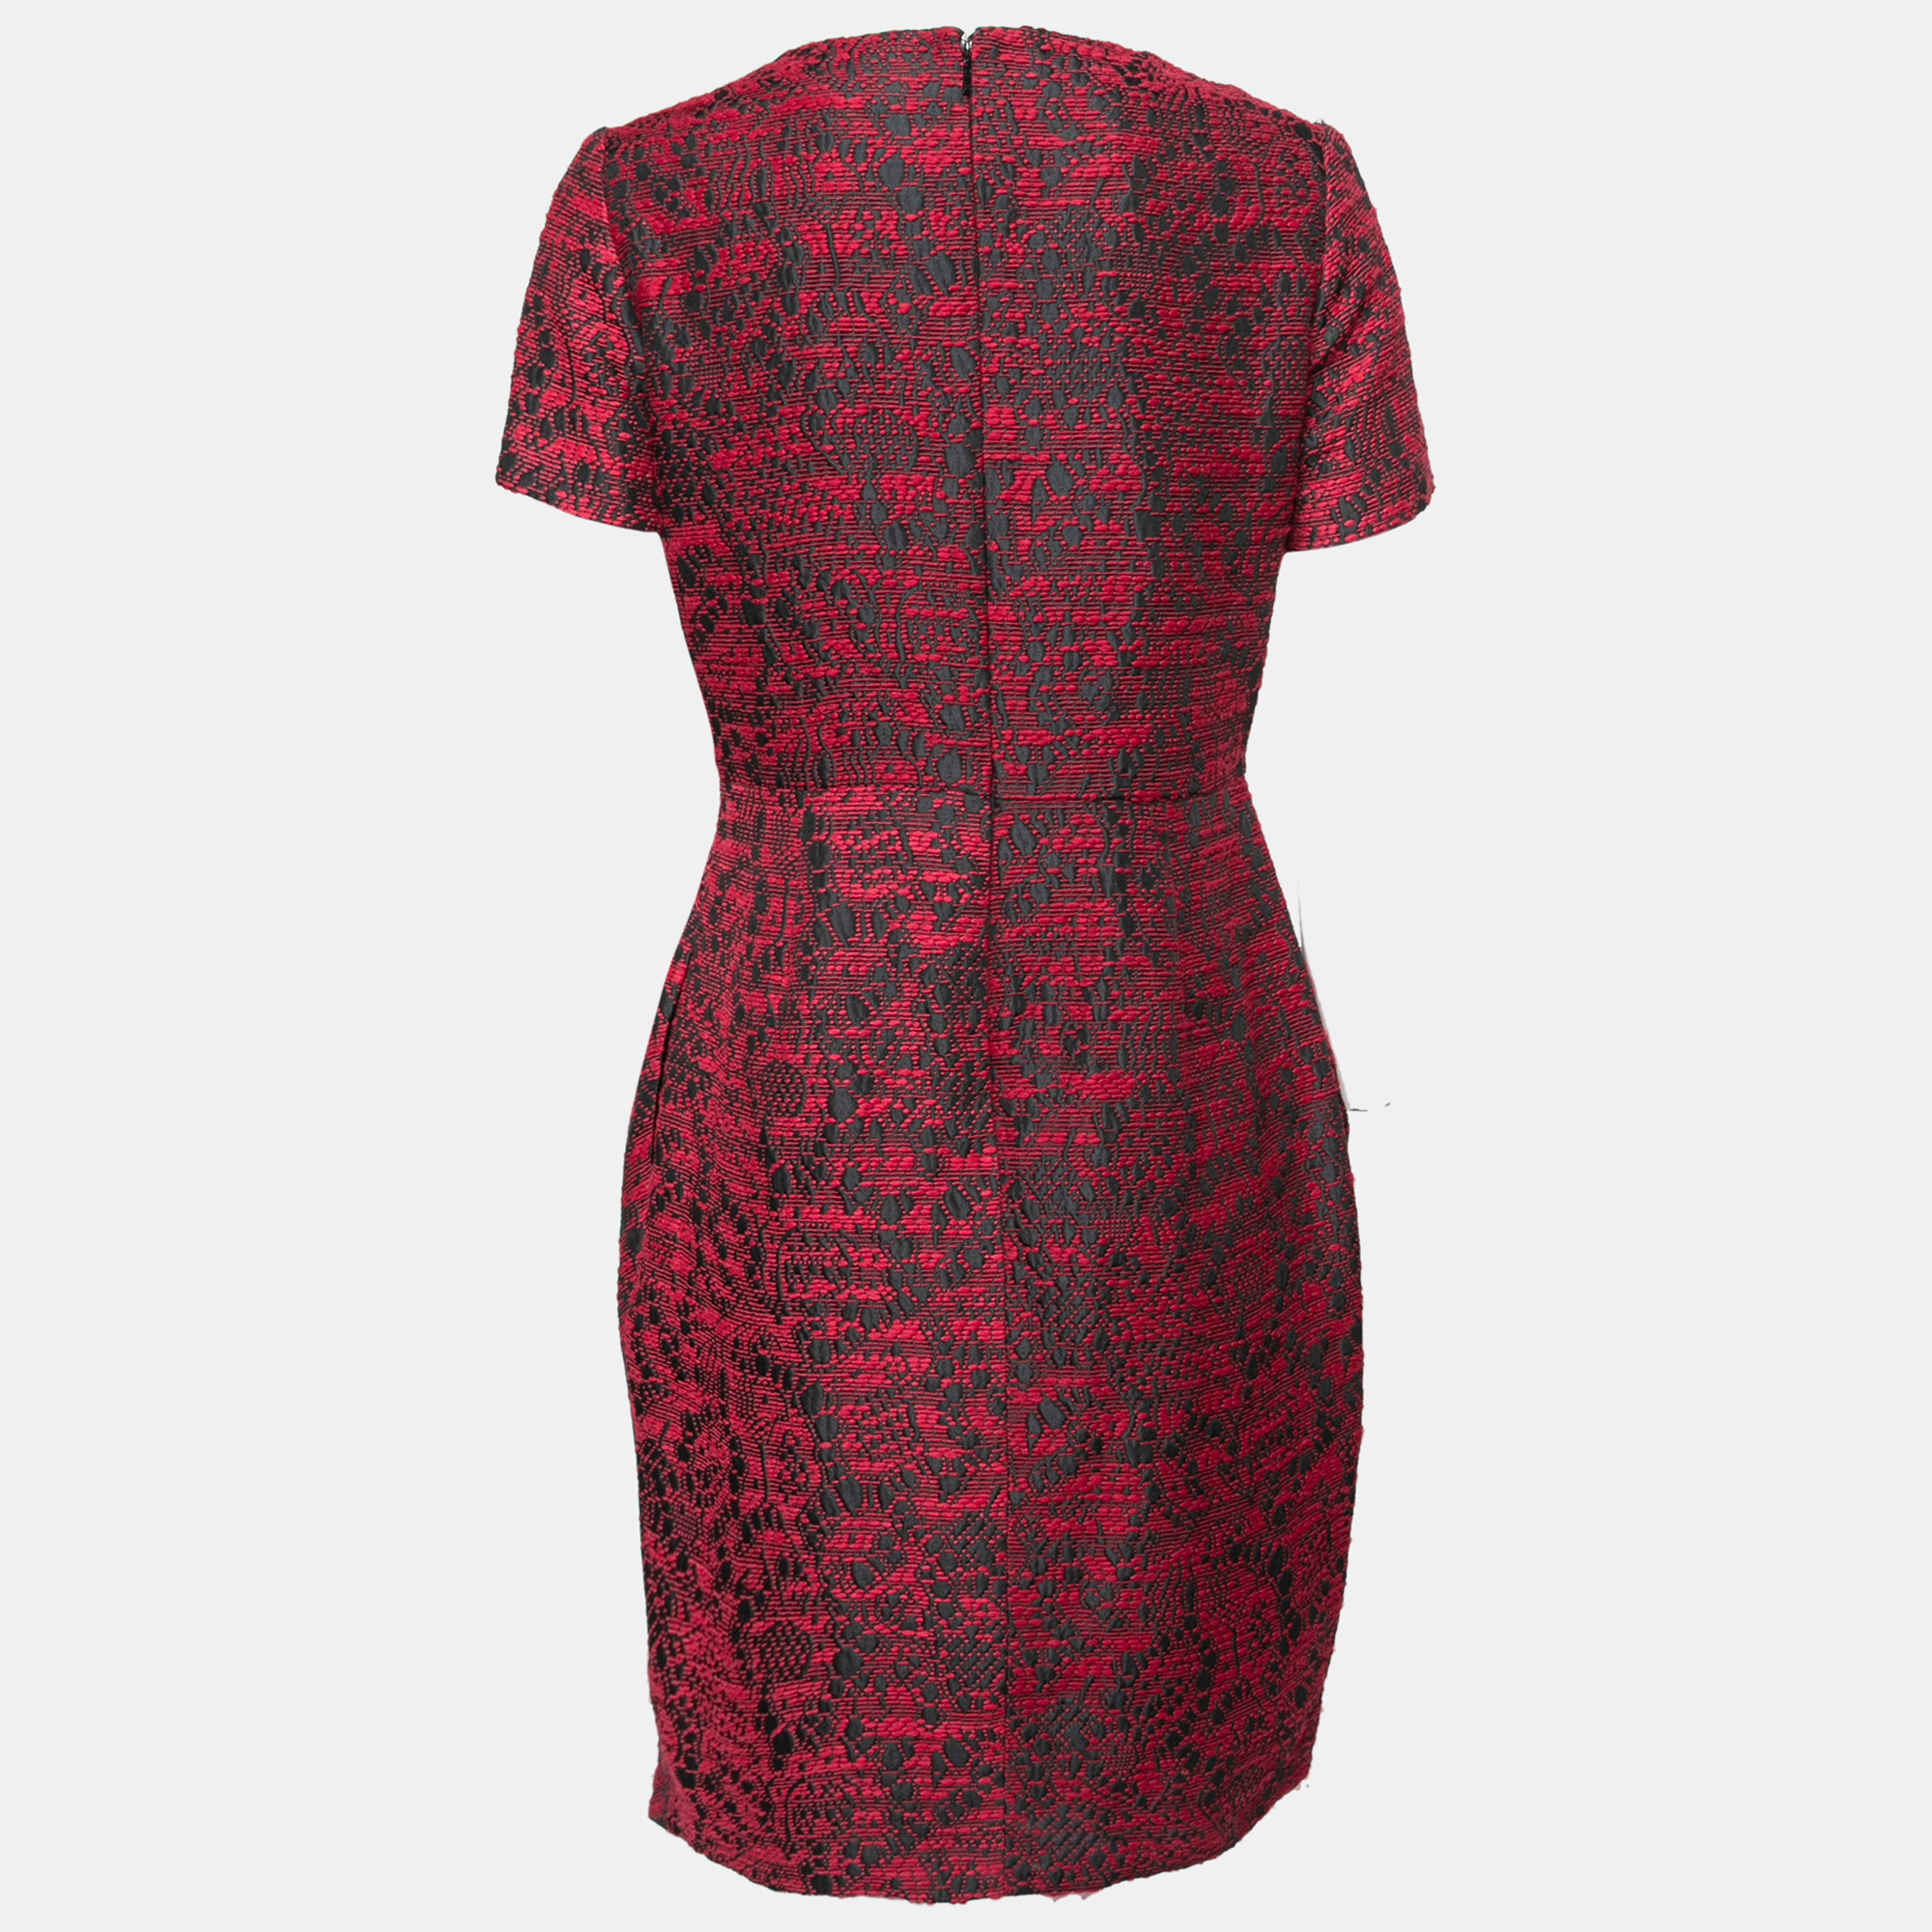 

CH Carolina Herrera Red & Black Textured Jacquard Dress